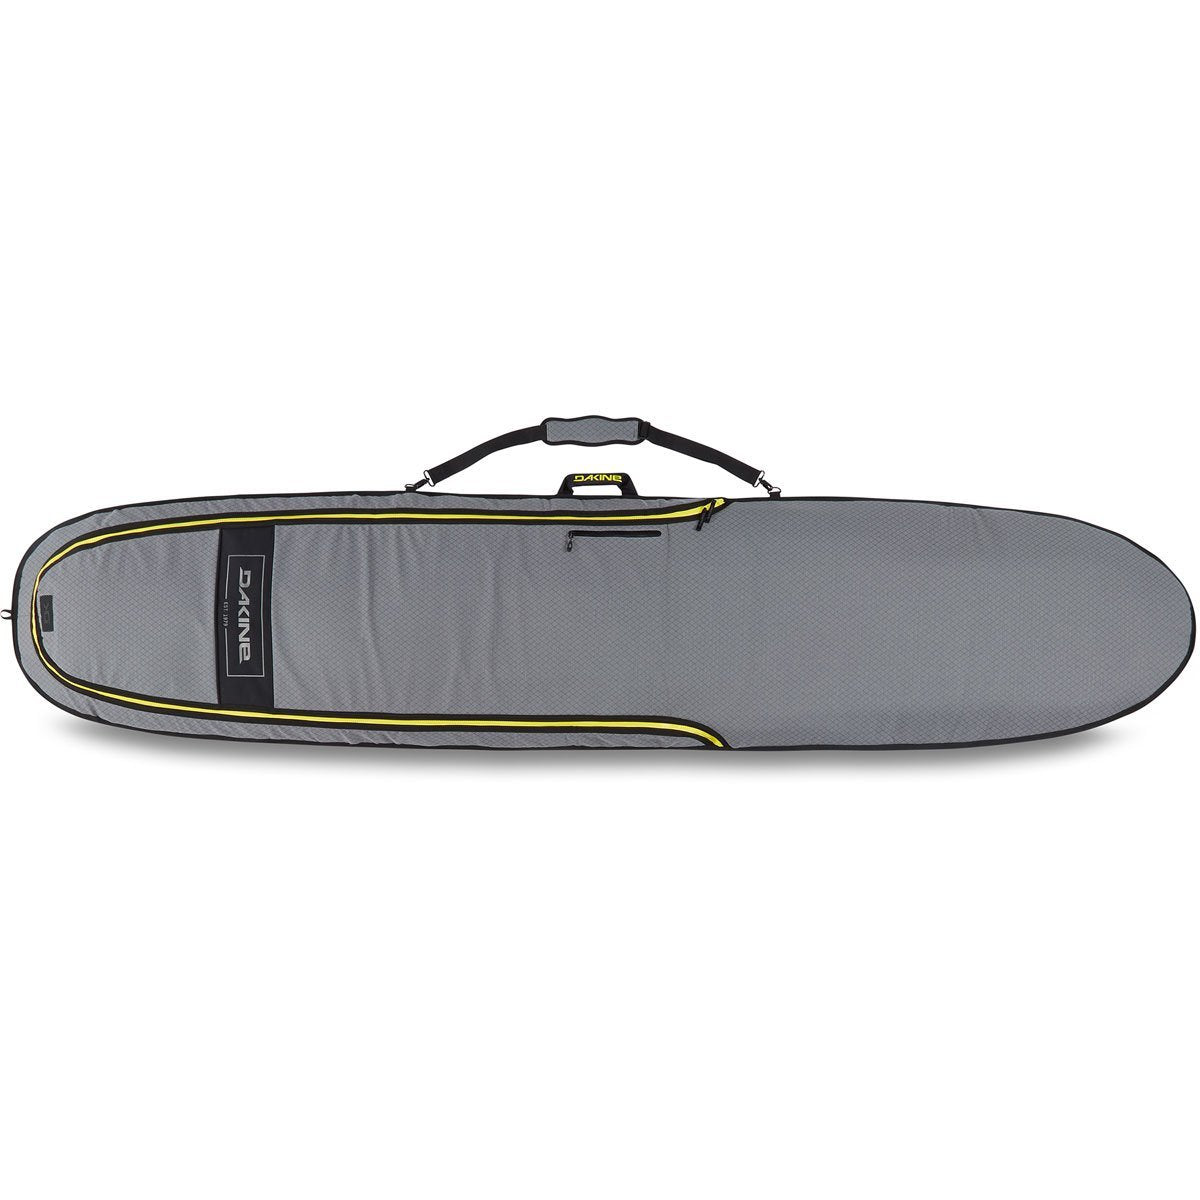 Mission Noserider Travel Boardbag 10-2 C